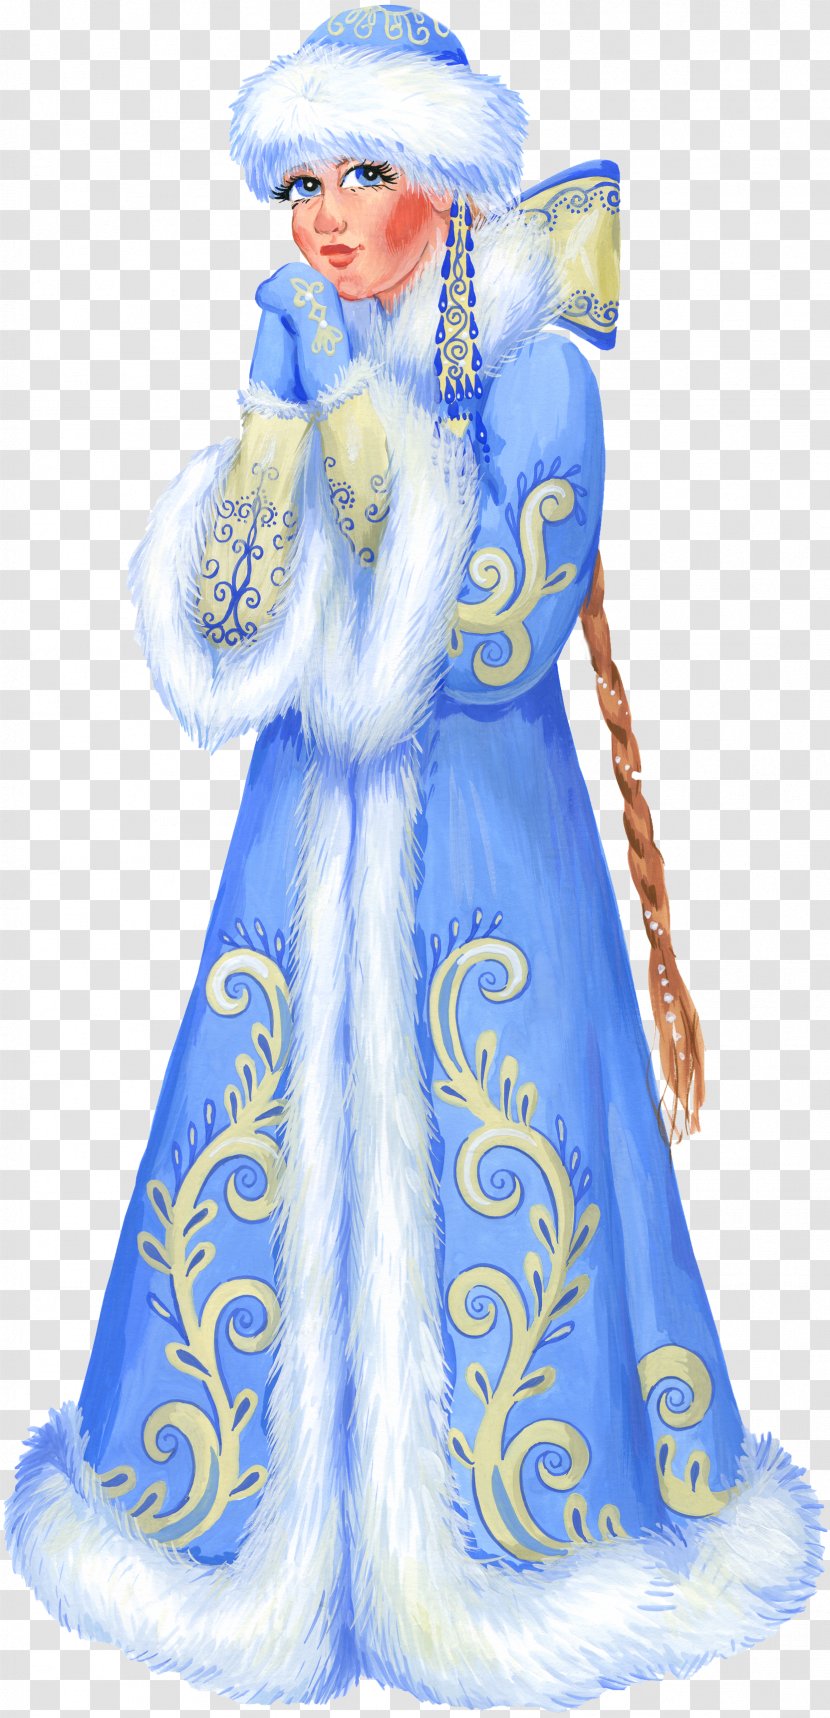 Snegurochka Ded Moroz The Snow Maiden Child - Costume - White Transparent PNG